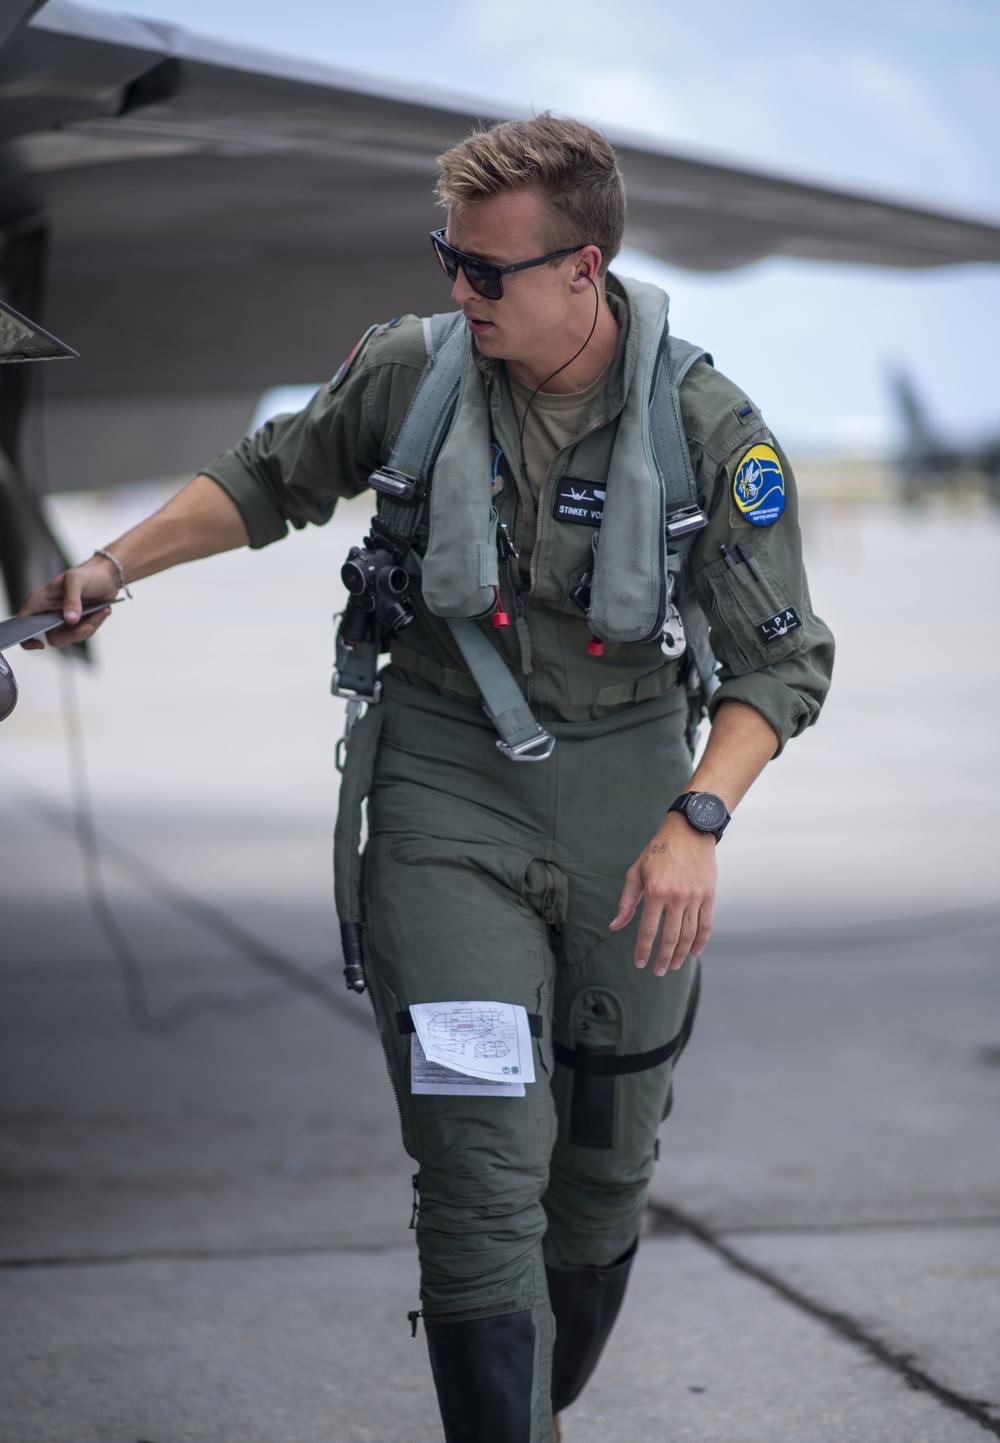 1st Lt. Stukey, F-22 student pilot